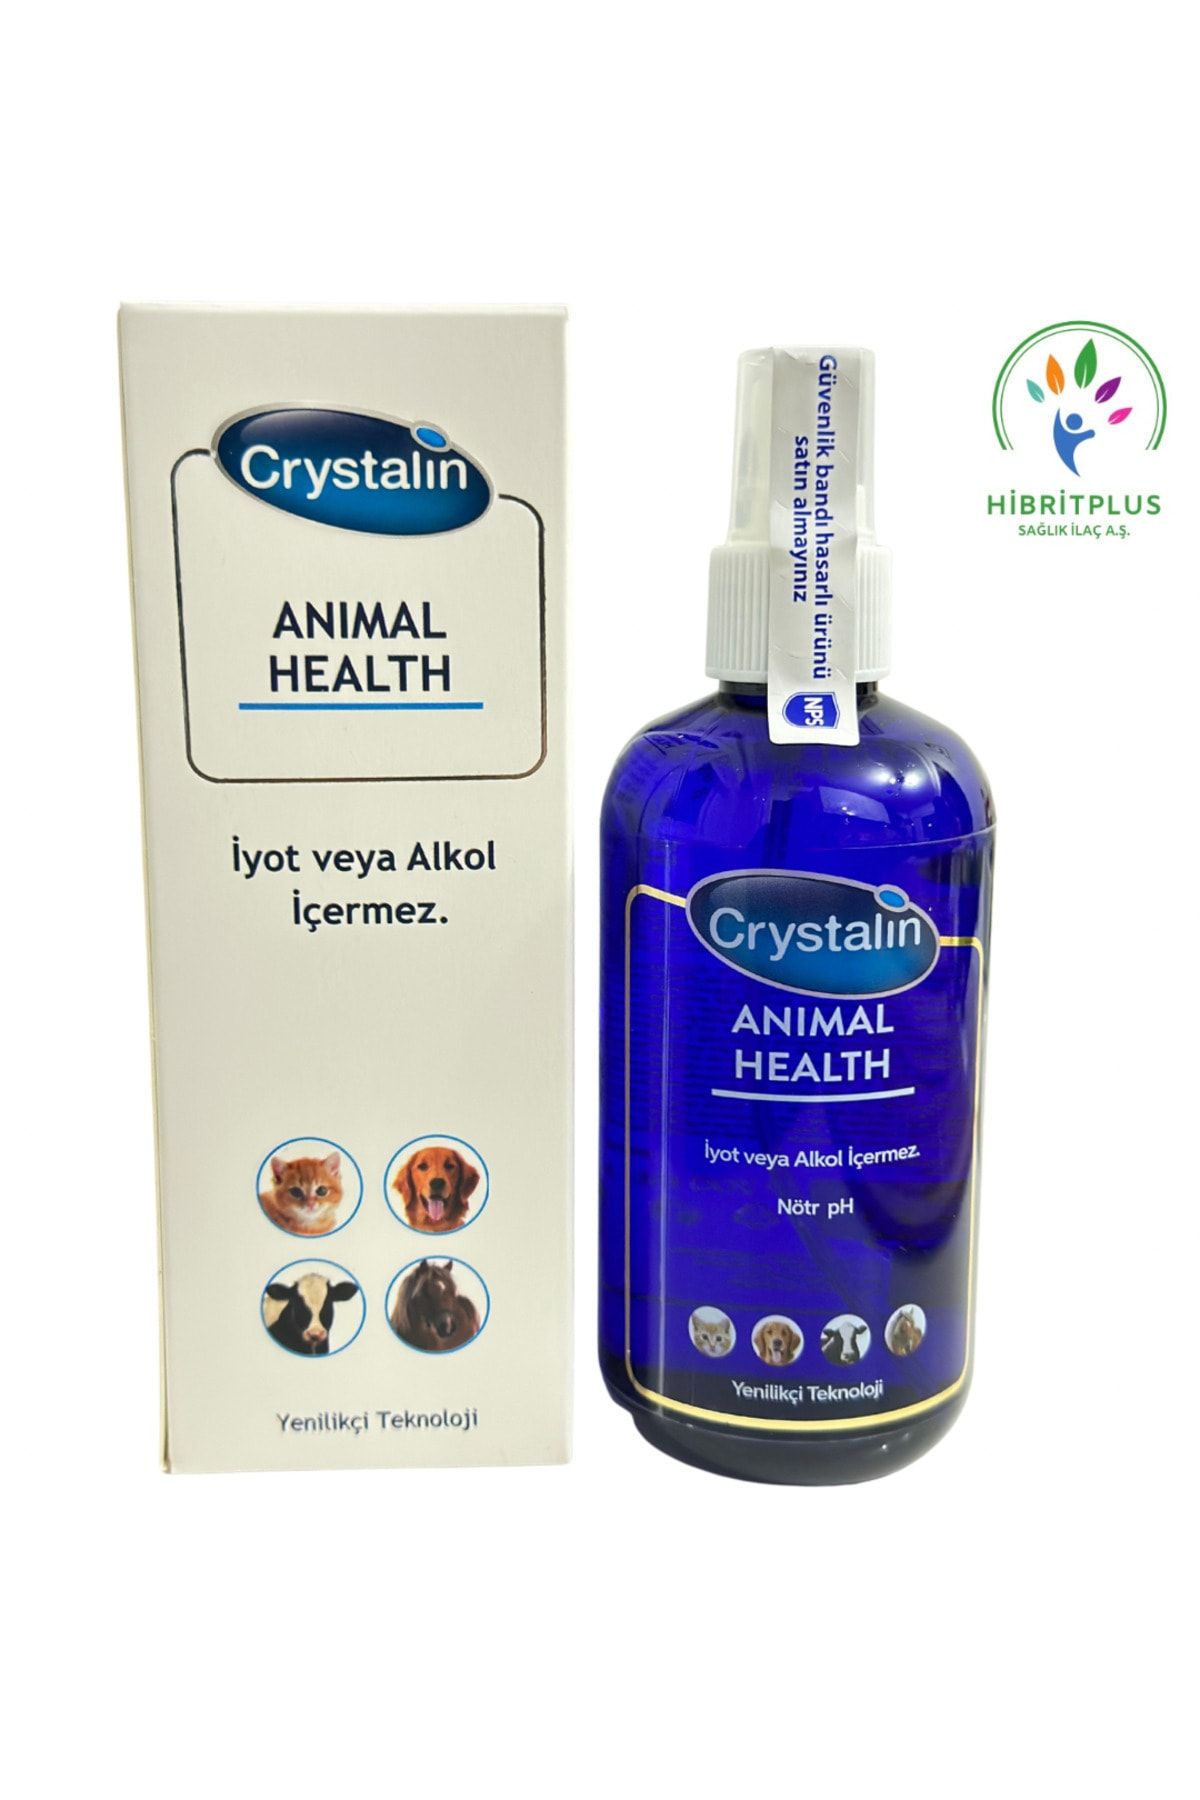 Crystalin Animal Health 200 ml Hibritplus